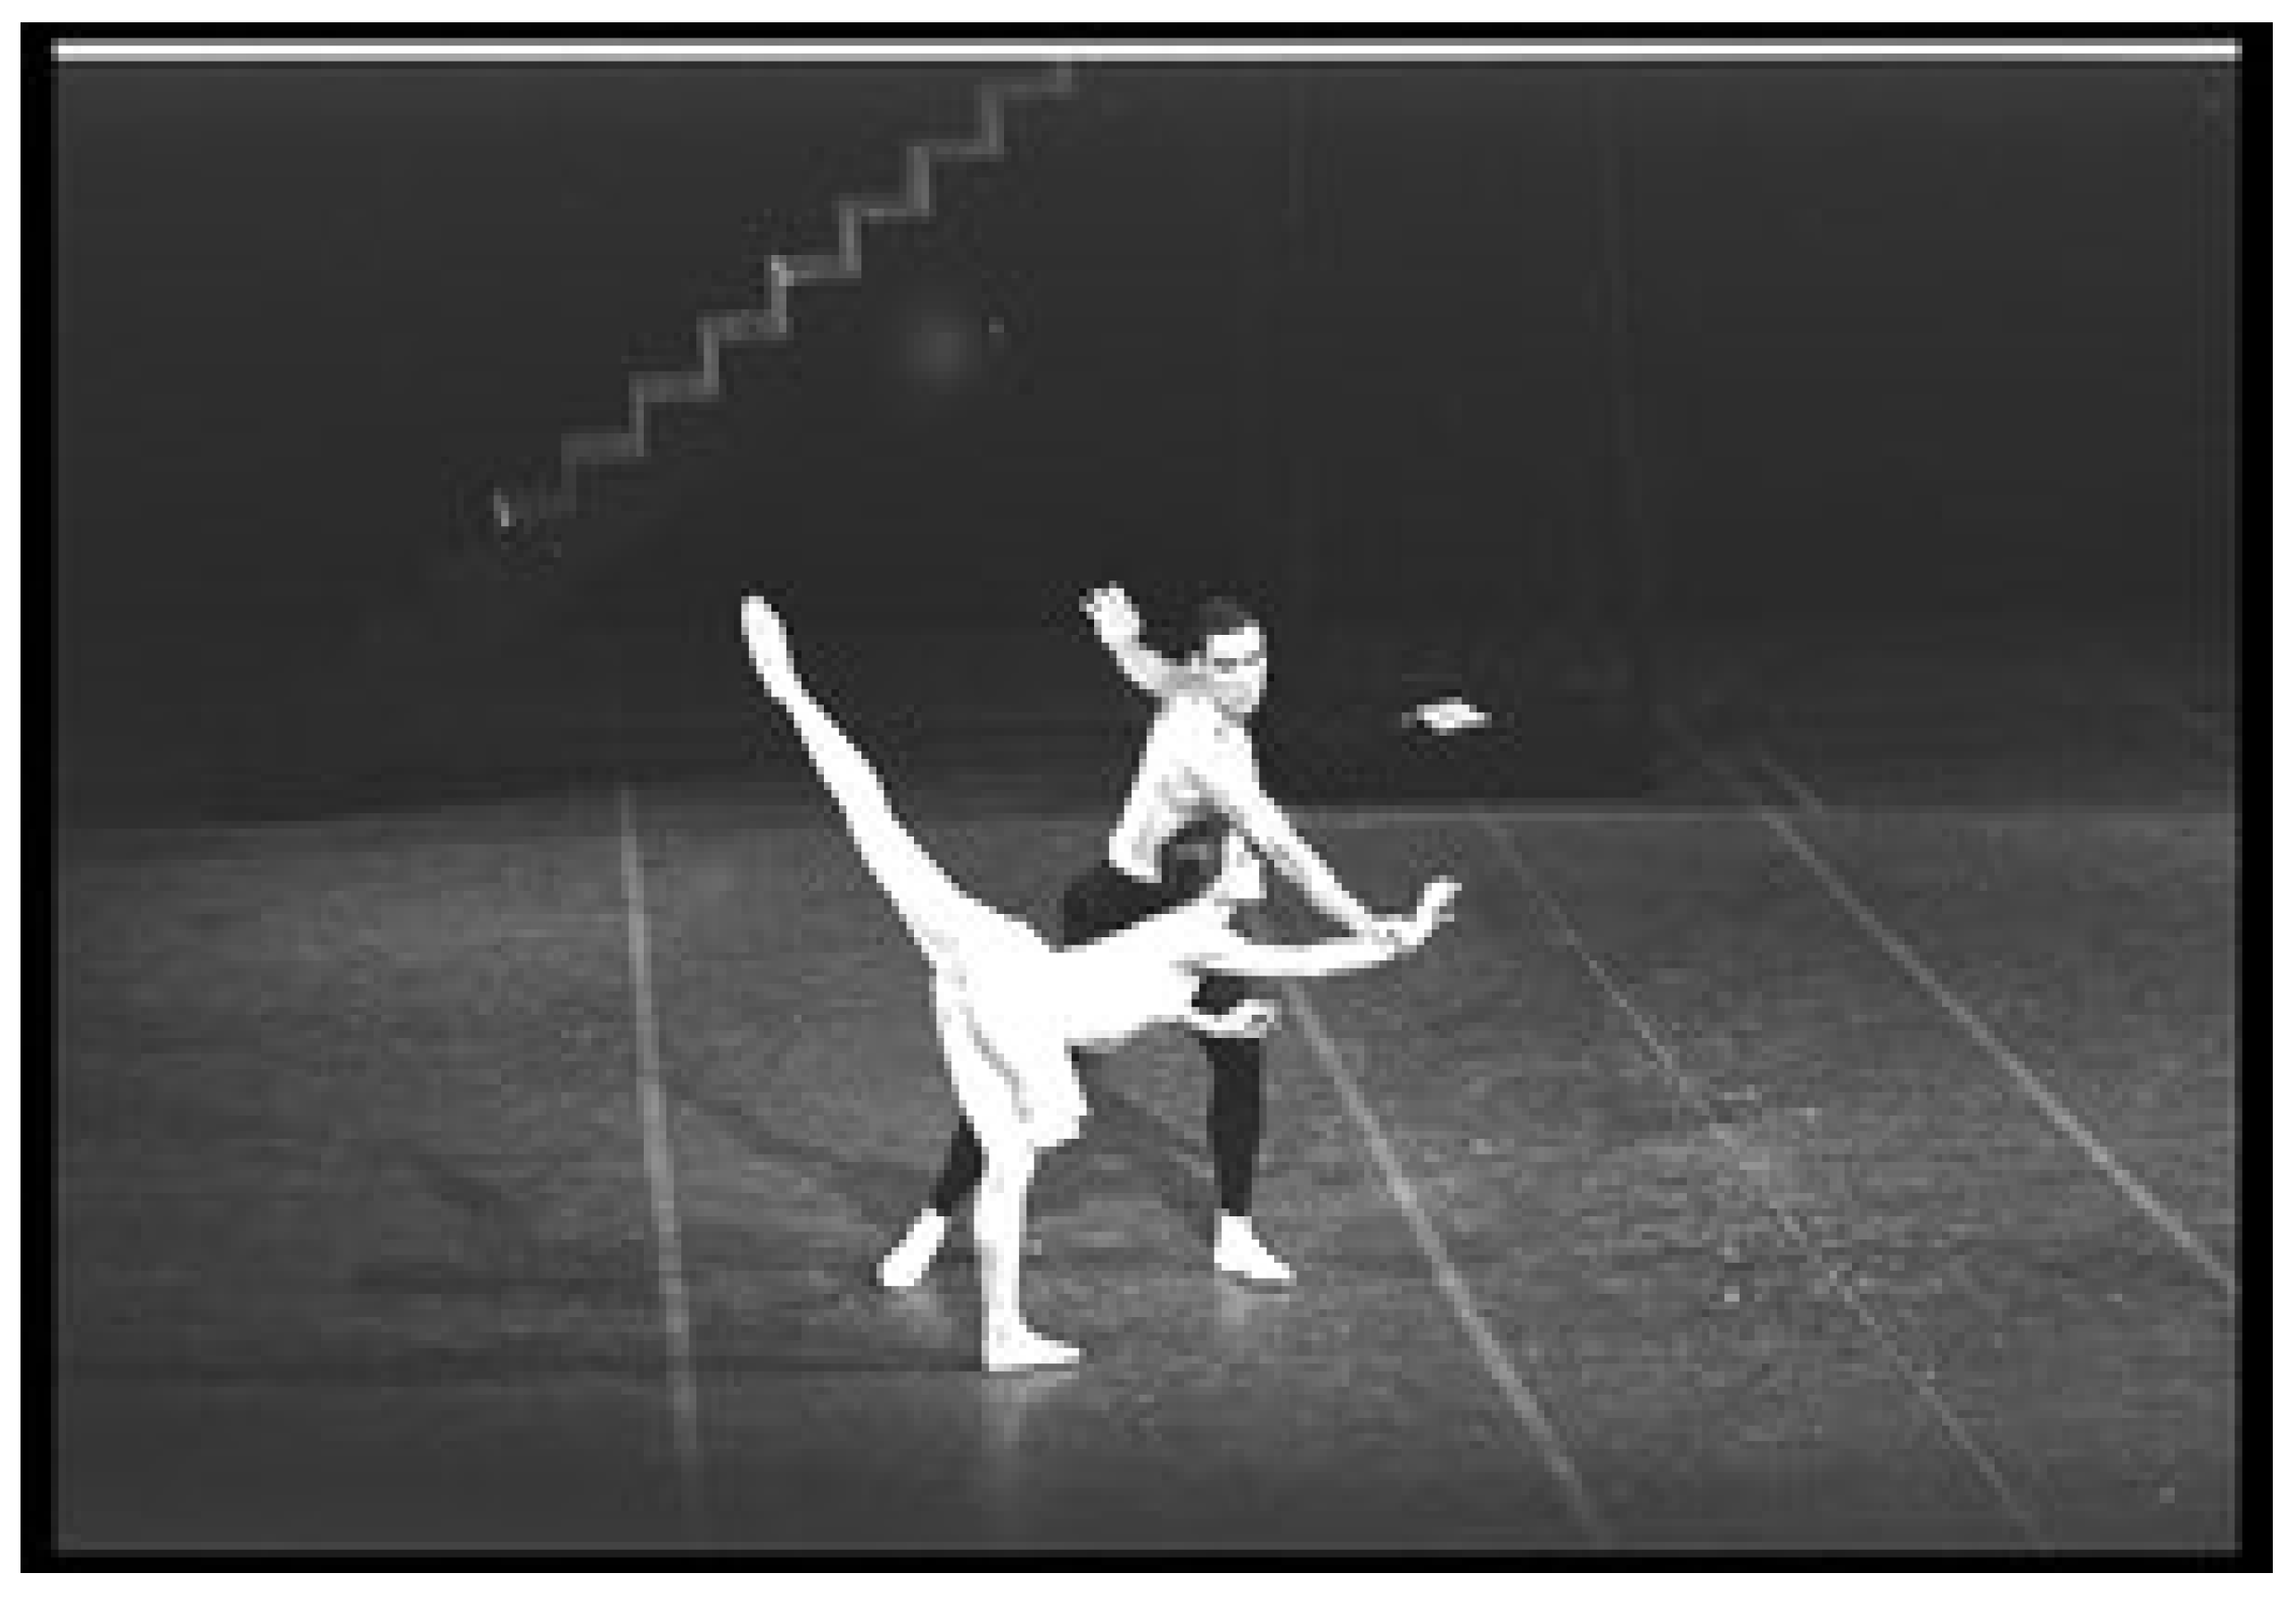 Arts | Free Full-Text | The Balanchine Dilemma: “So-Called